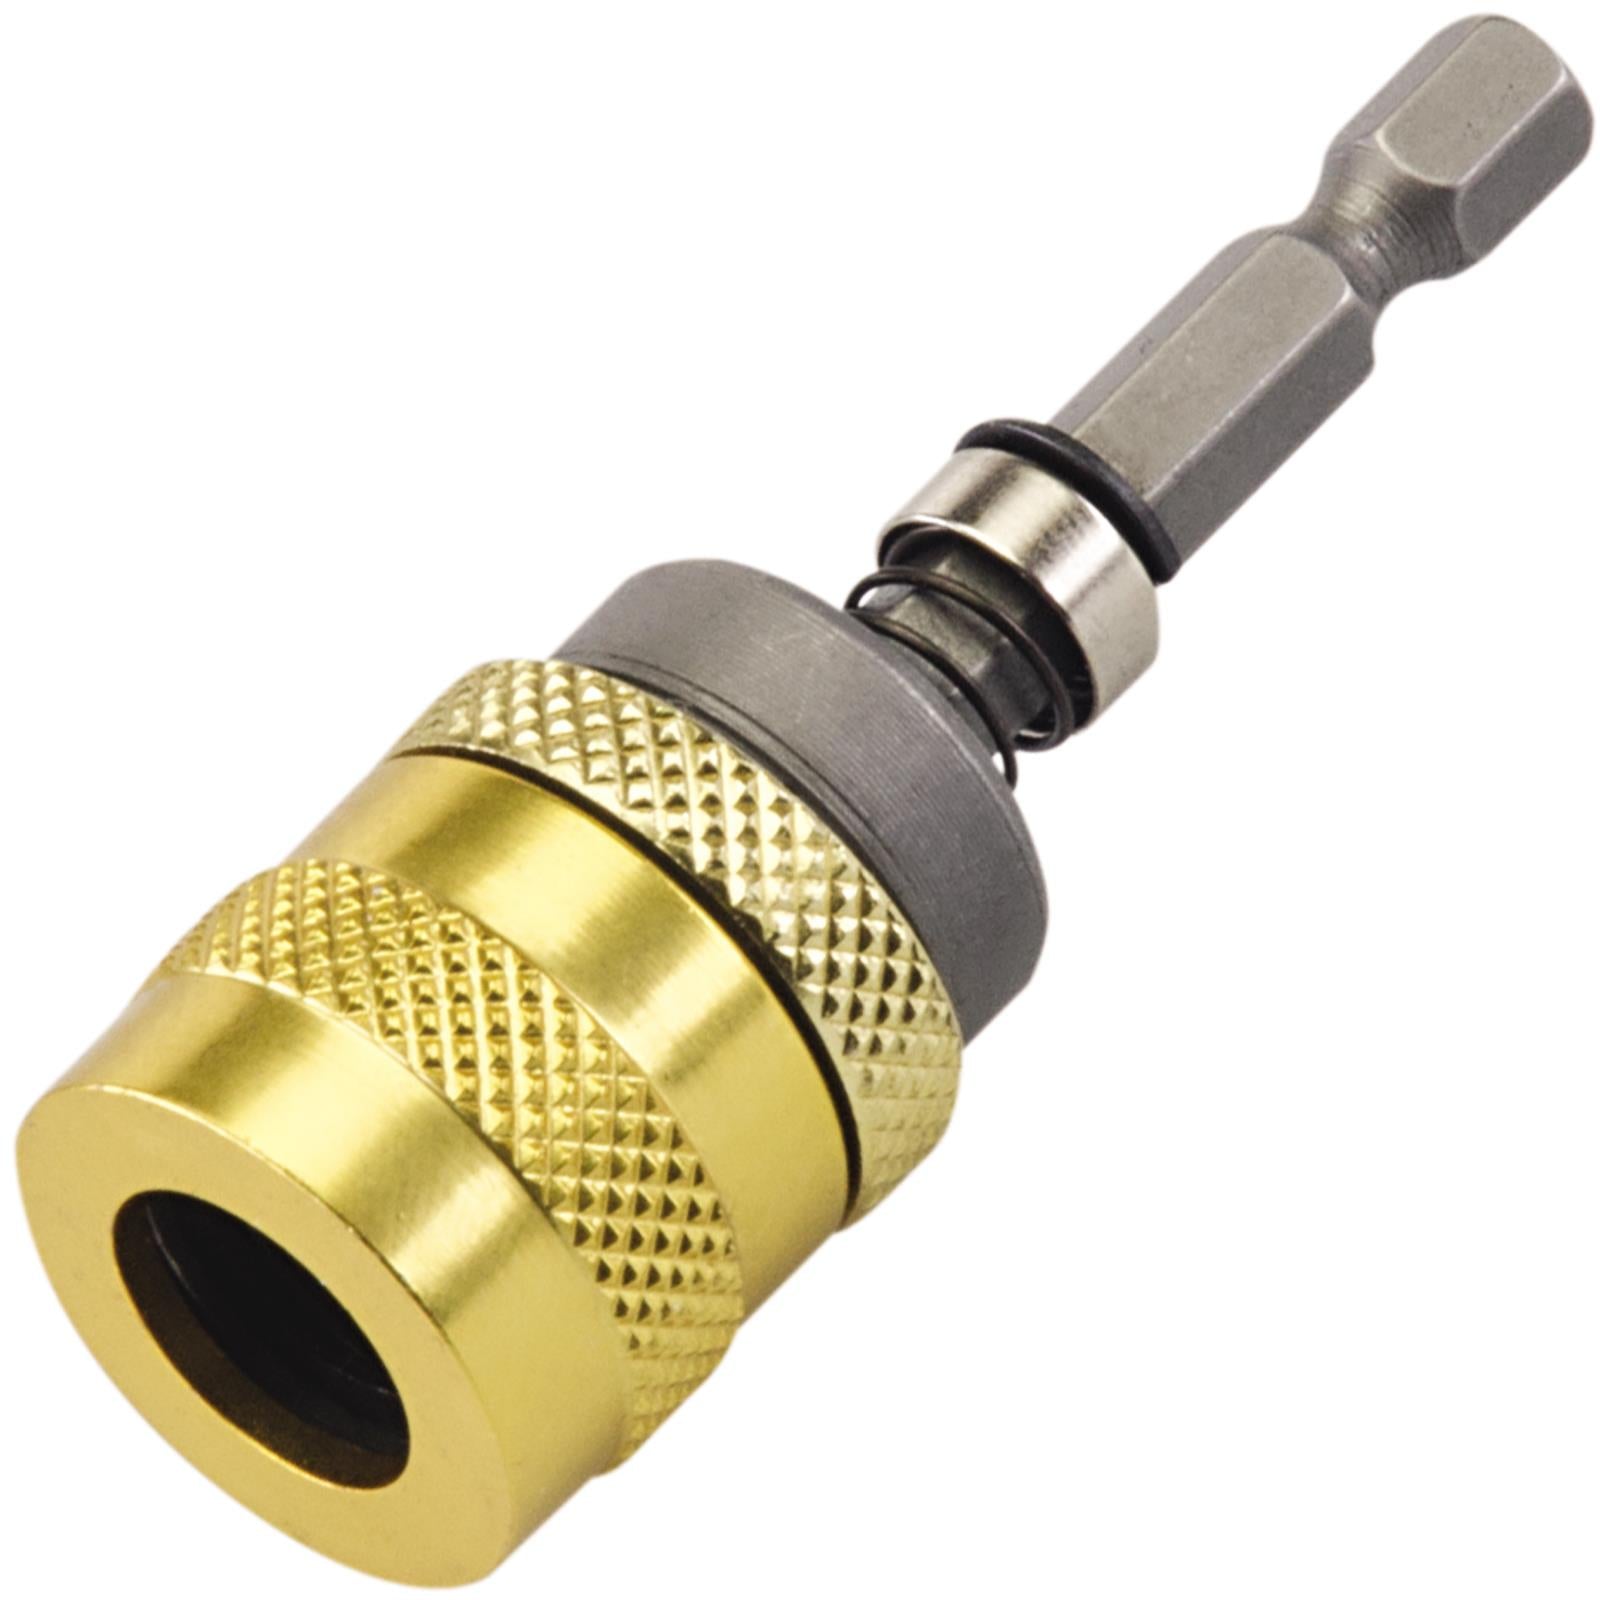 Silverline 1/4" Depth Sensitive Bit Holder Drywall Drill Bit Adjustable Precise